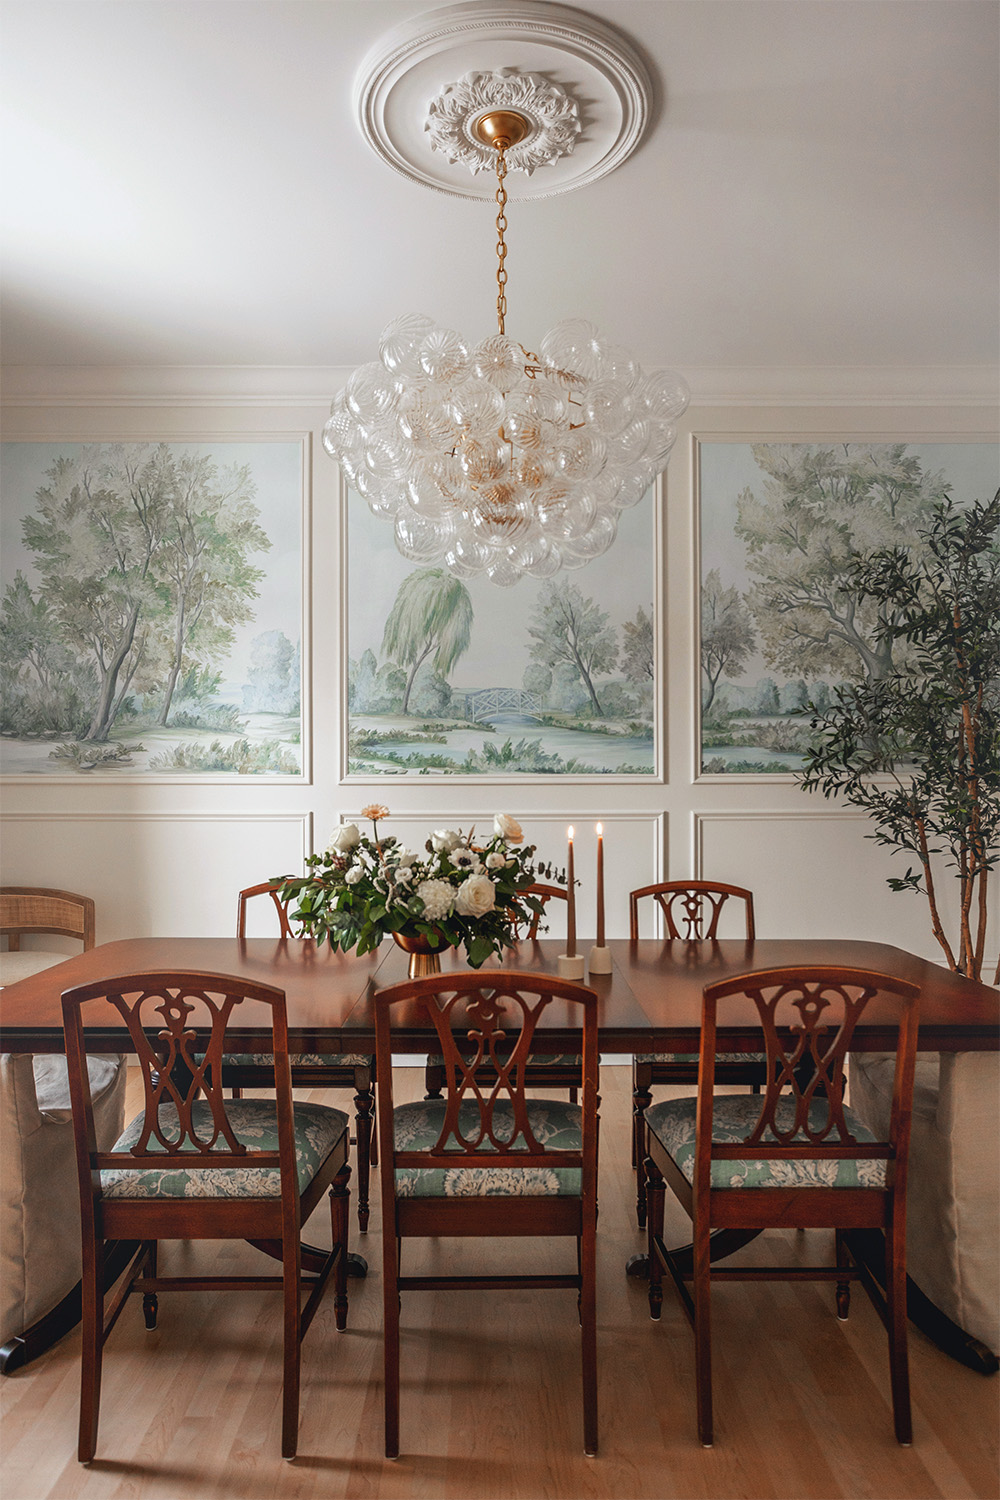 Blue painted scenic landscape wallpaper panels framed by mouldings in elegant dining room